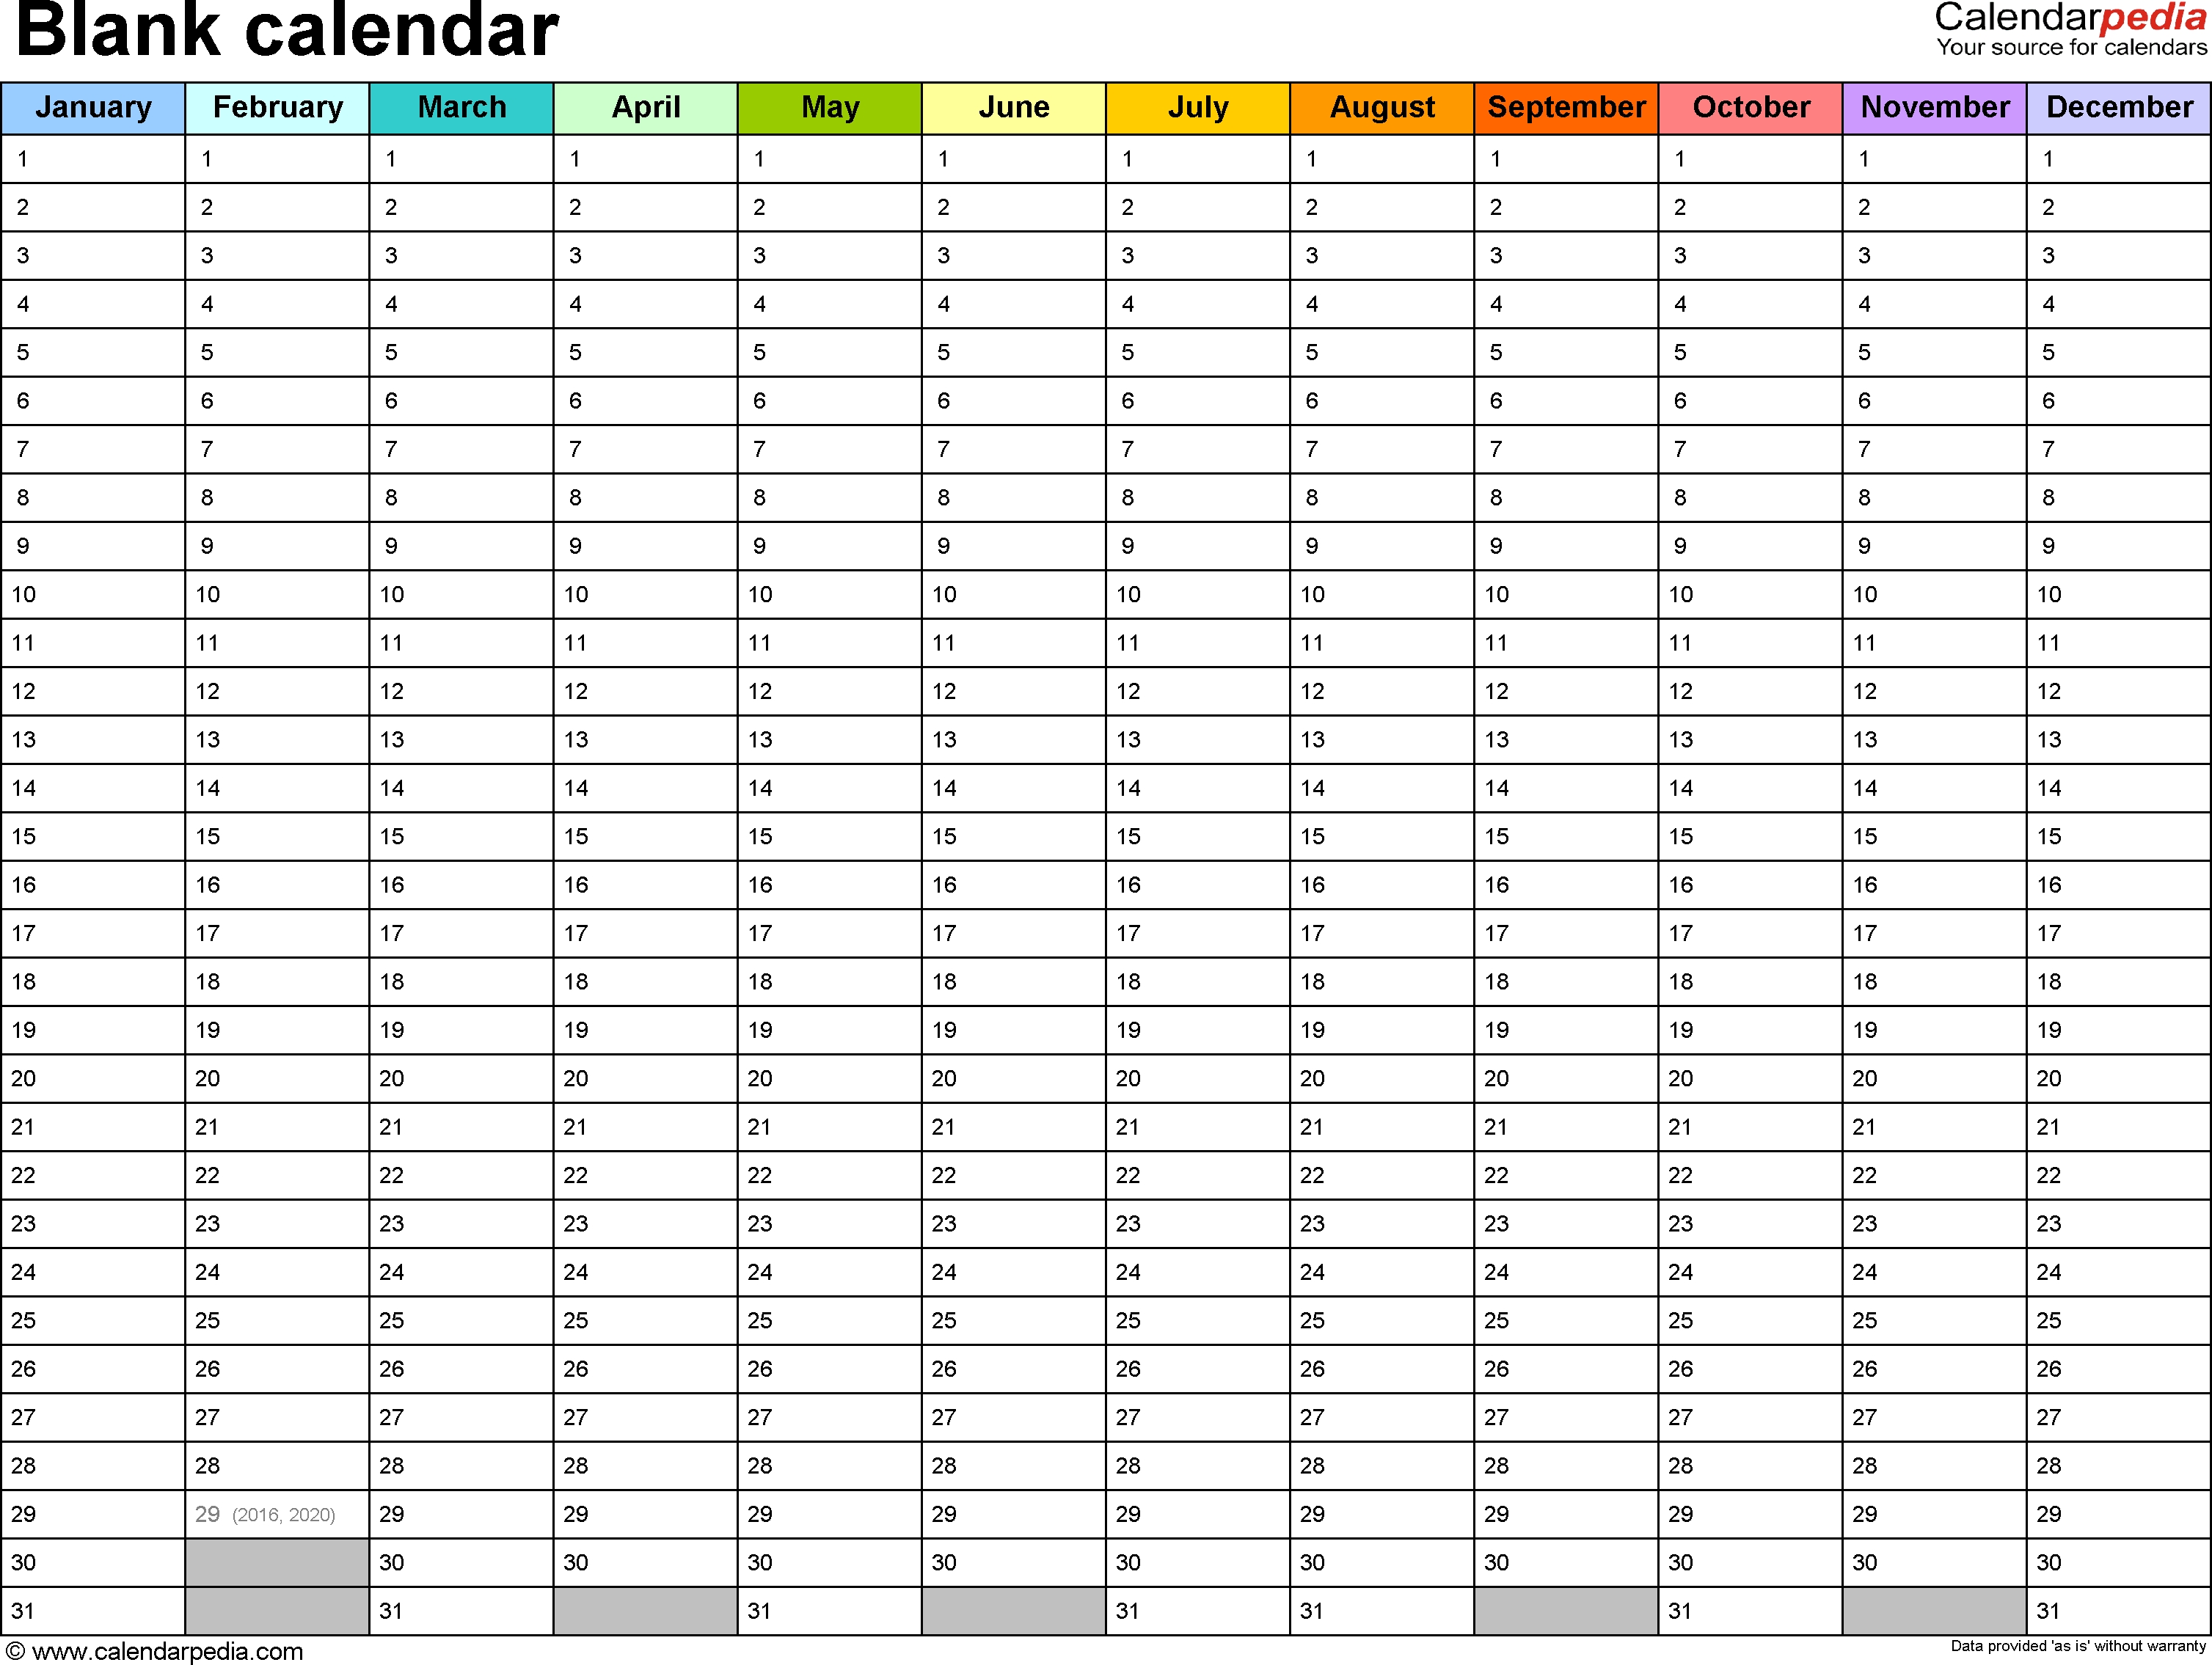 Blank Calendar - 9 Free Printable Microsoft Word Templates regarding 3 Month Calendar Template Word